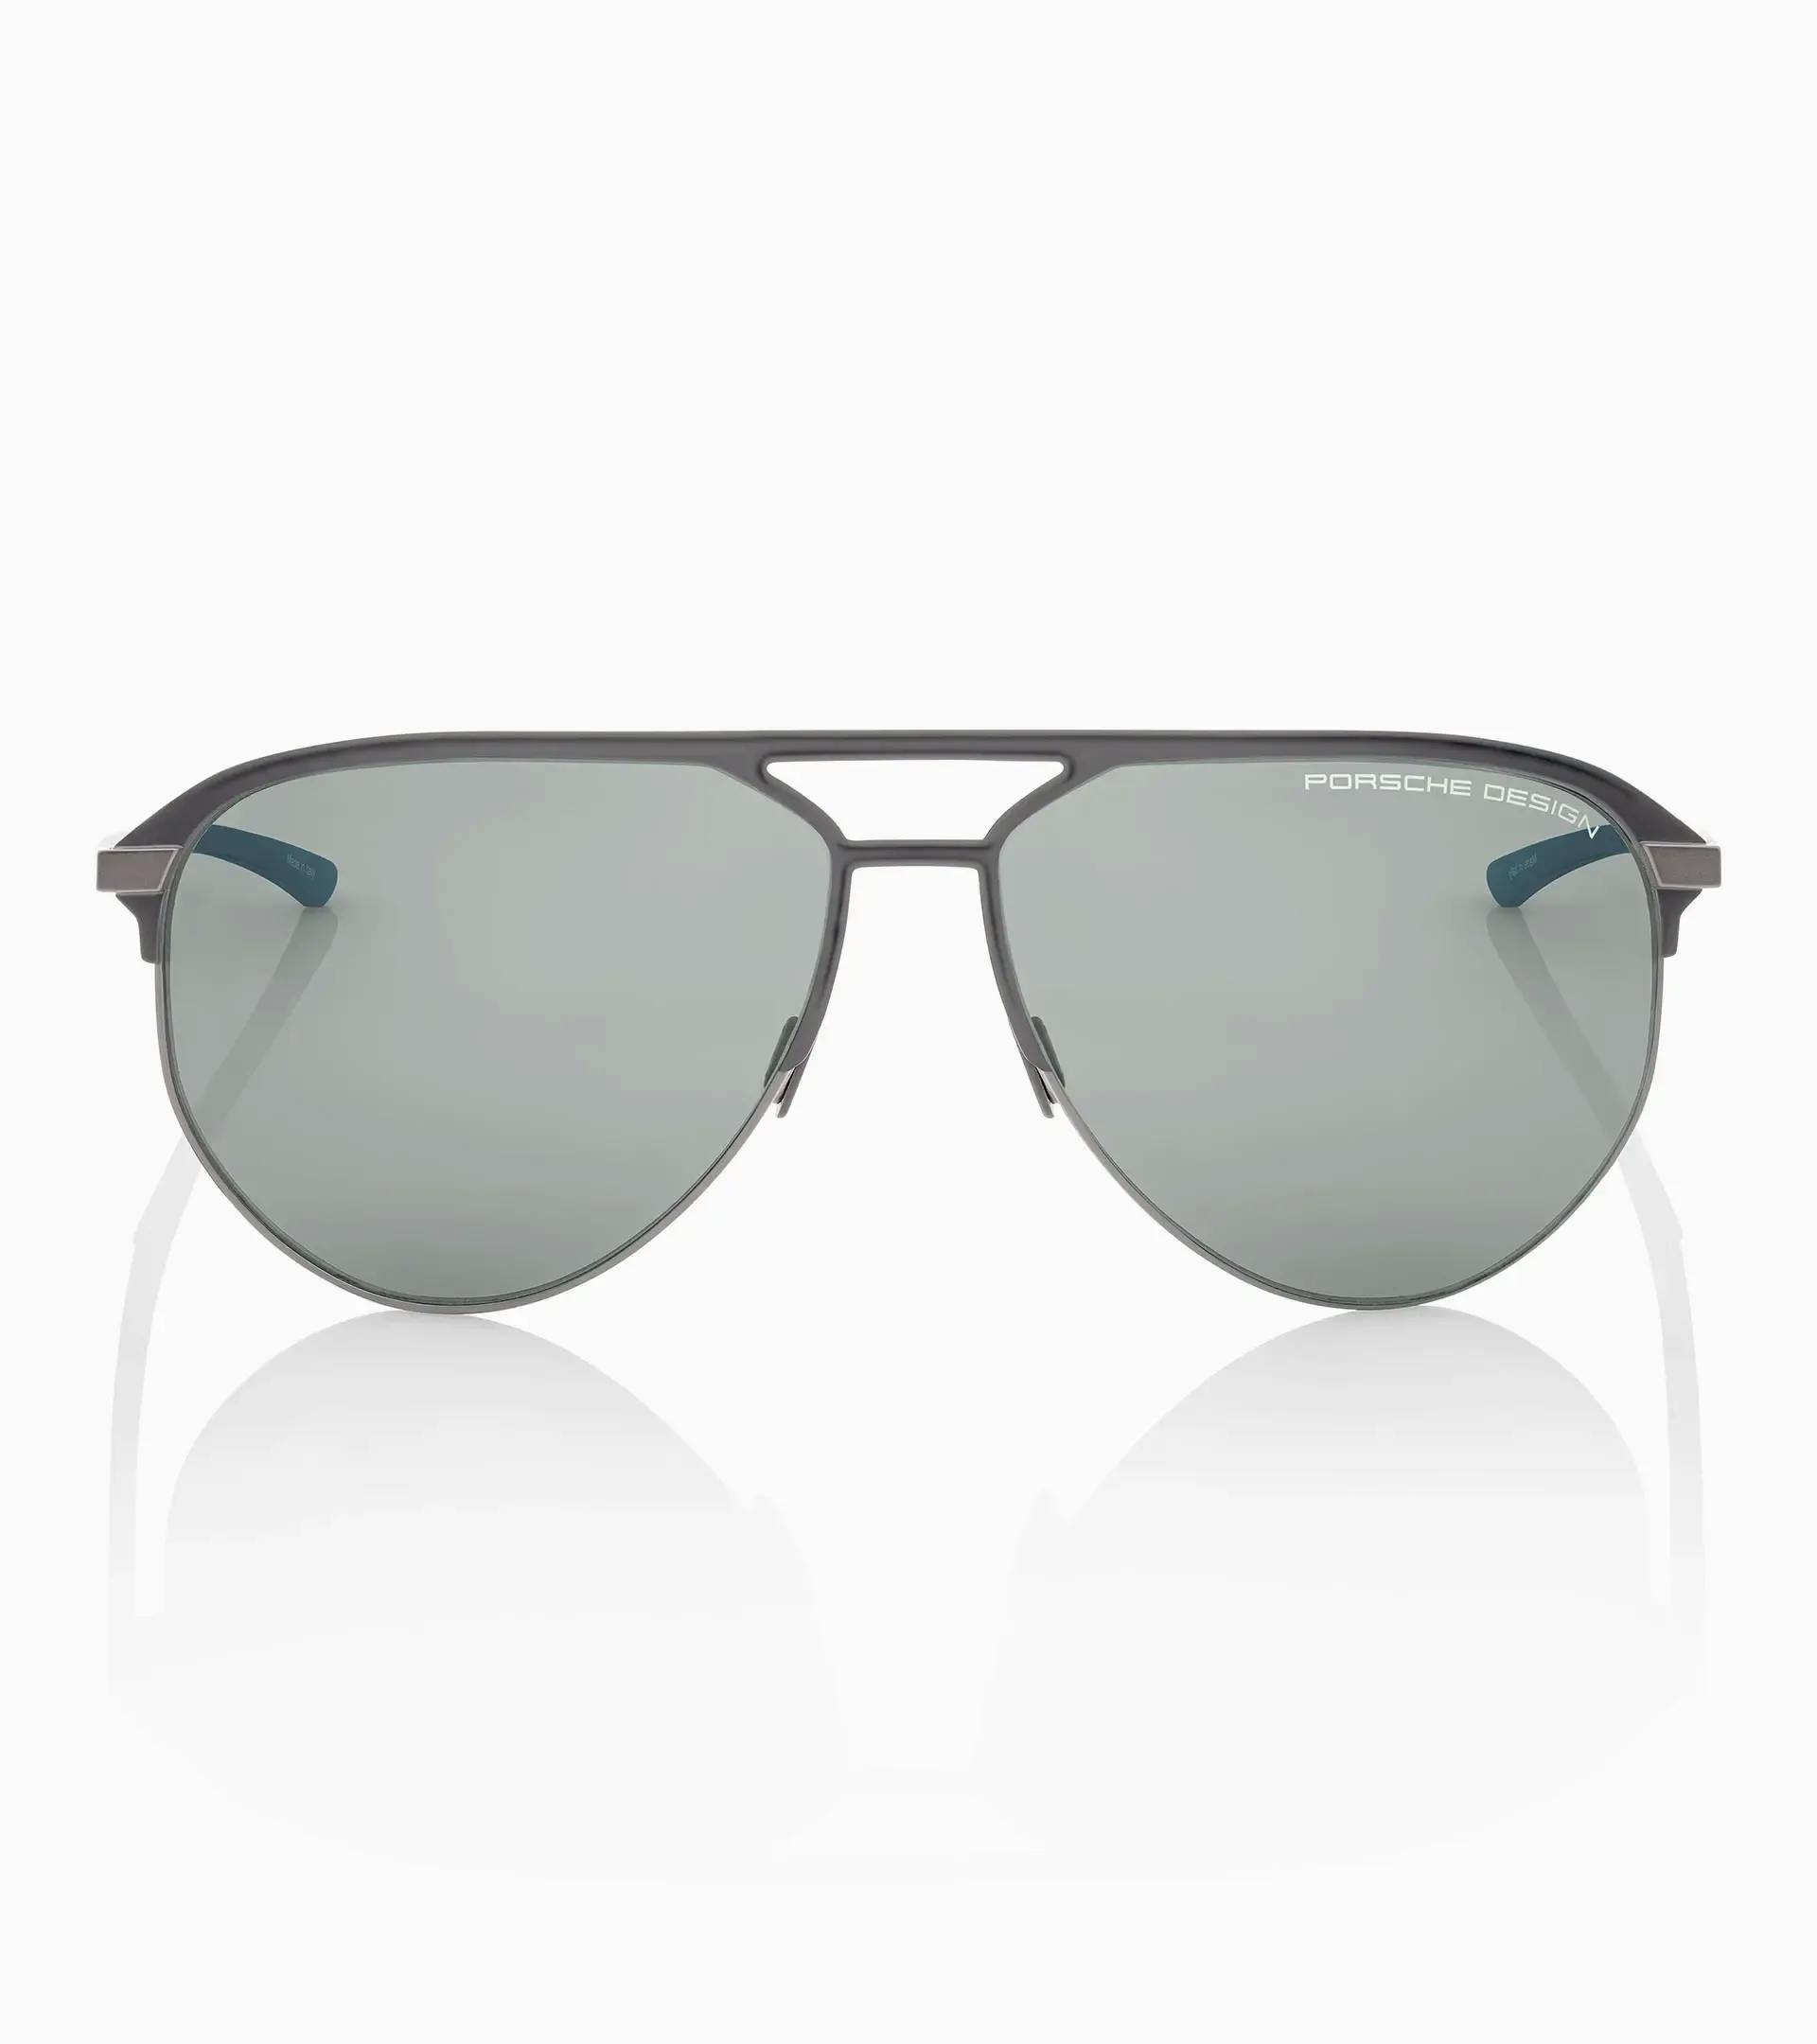 Sunglasses P´8965 Patrick Dempsey Ltd. Edition 3